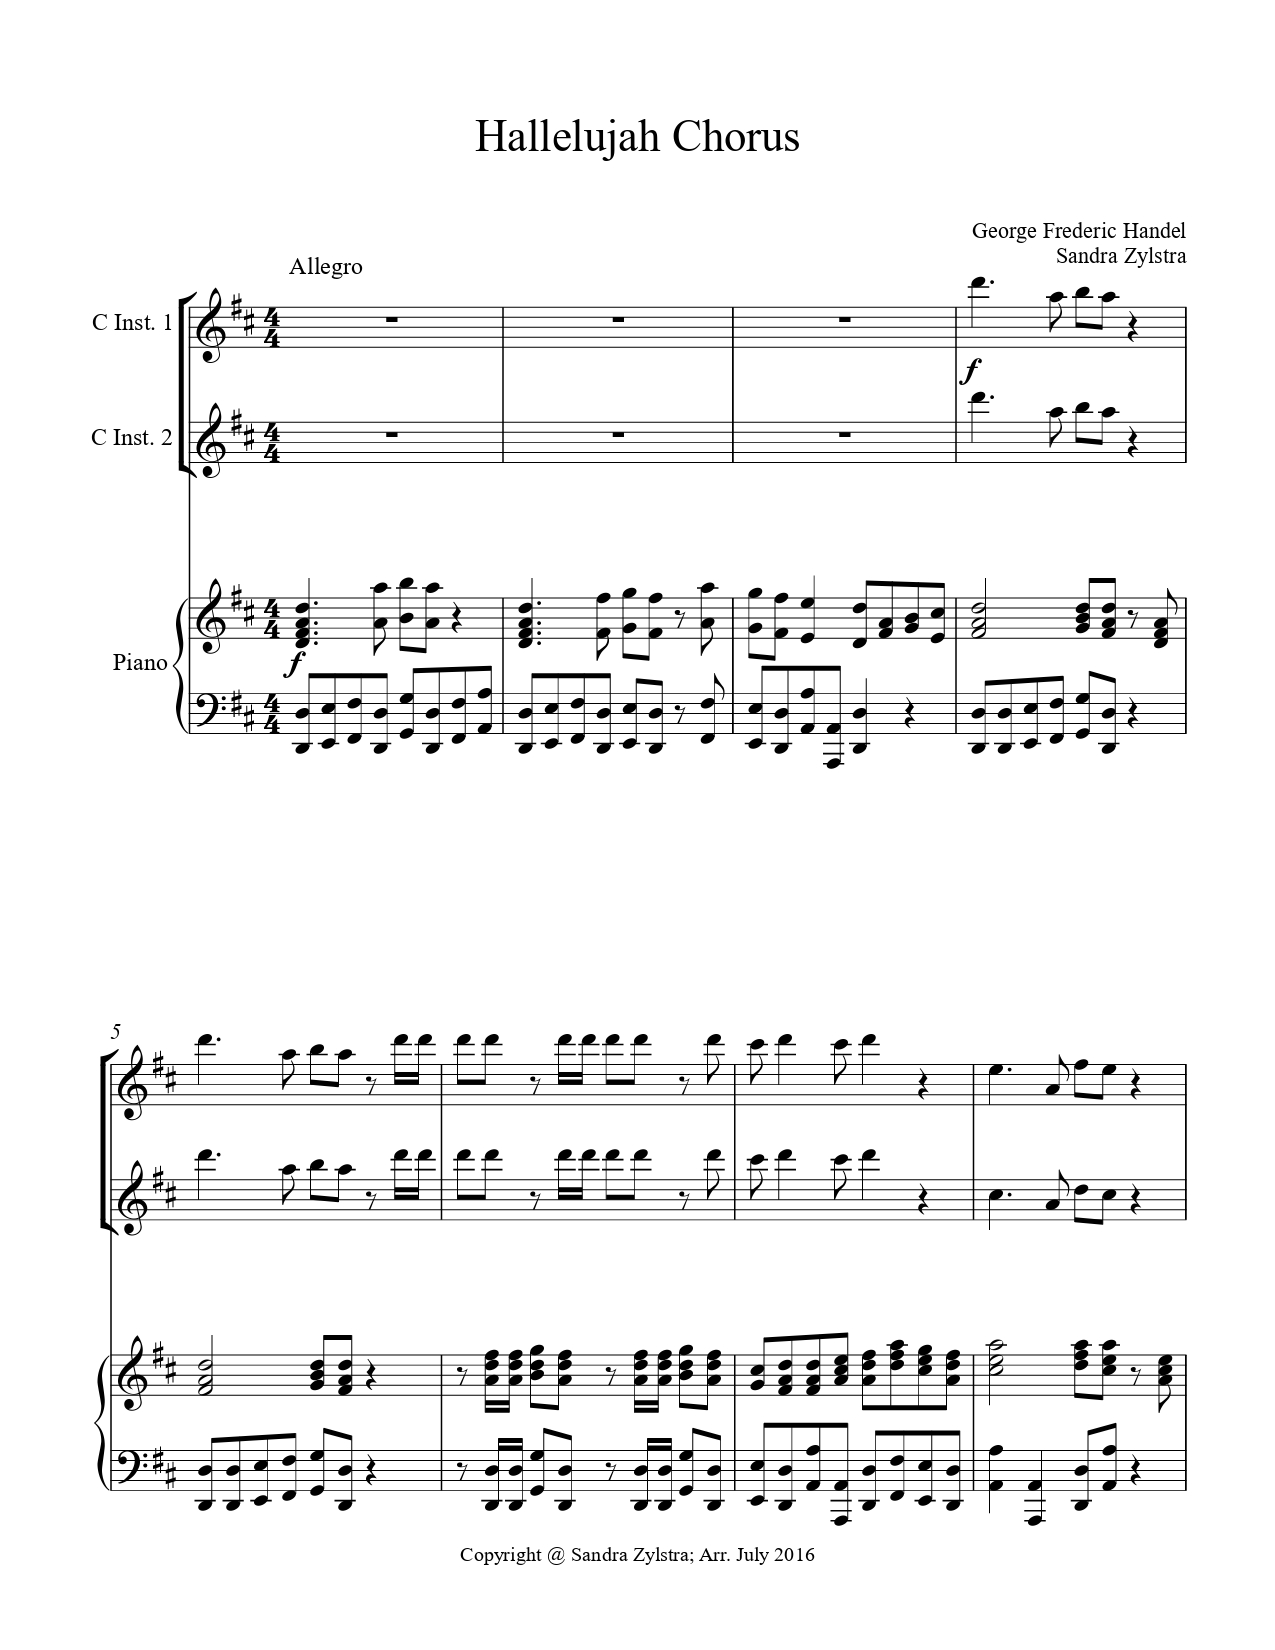 Hallelujah Chorus treble C instrument duet parts cover page 00021